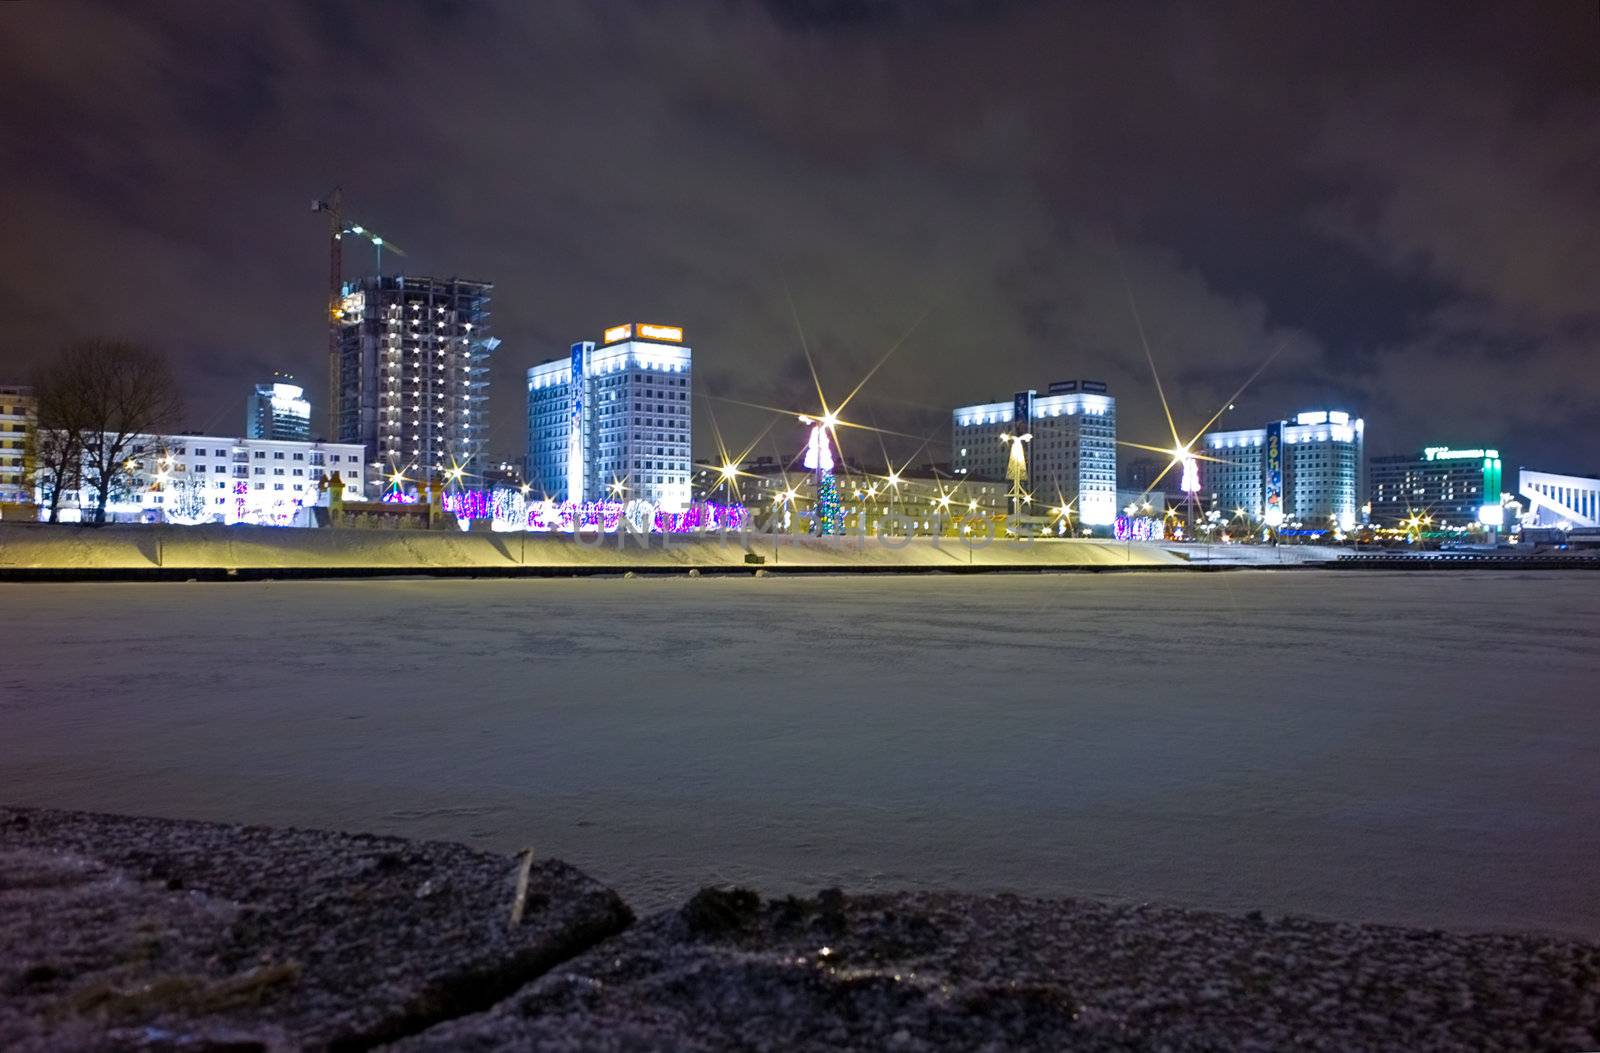 Pobediteley avenue at night Minsk, Belarus